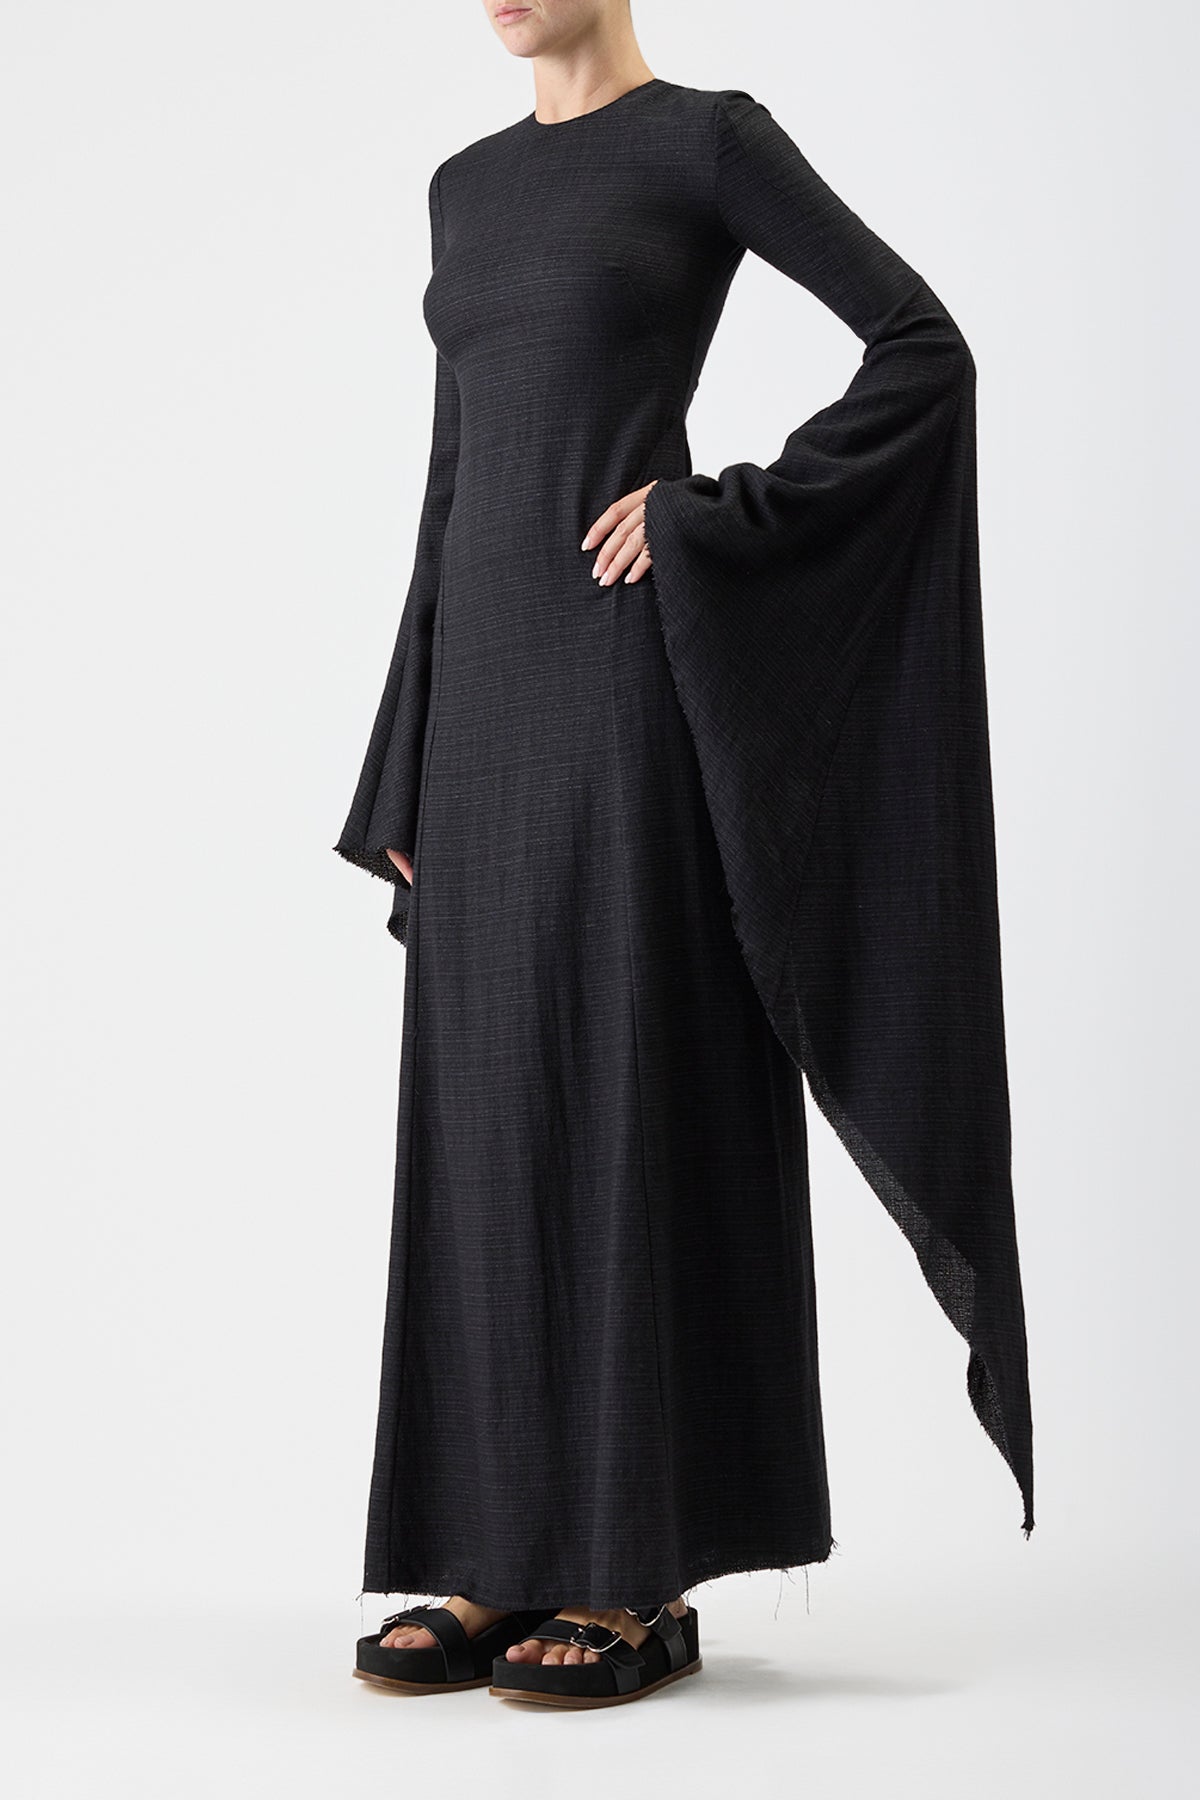 Sigrud Draped Dress in Black Wool Silk Gauze